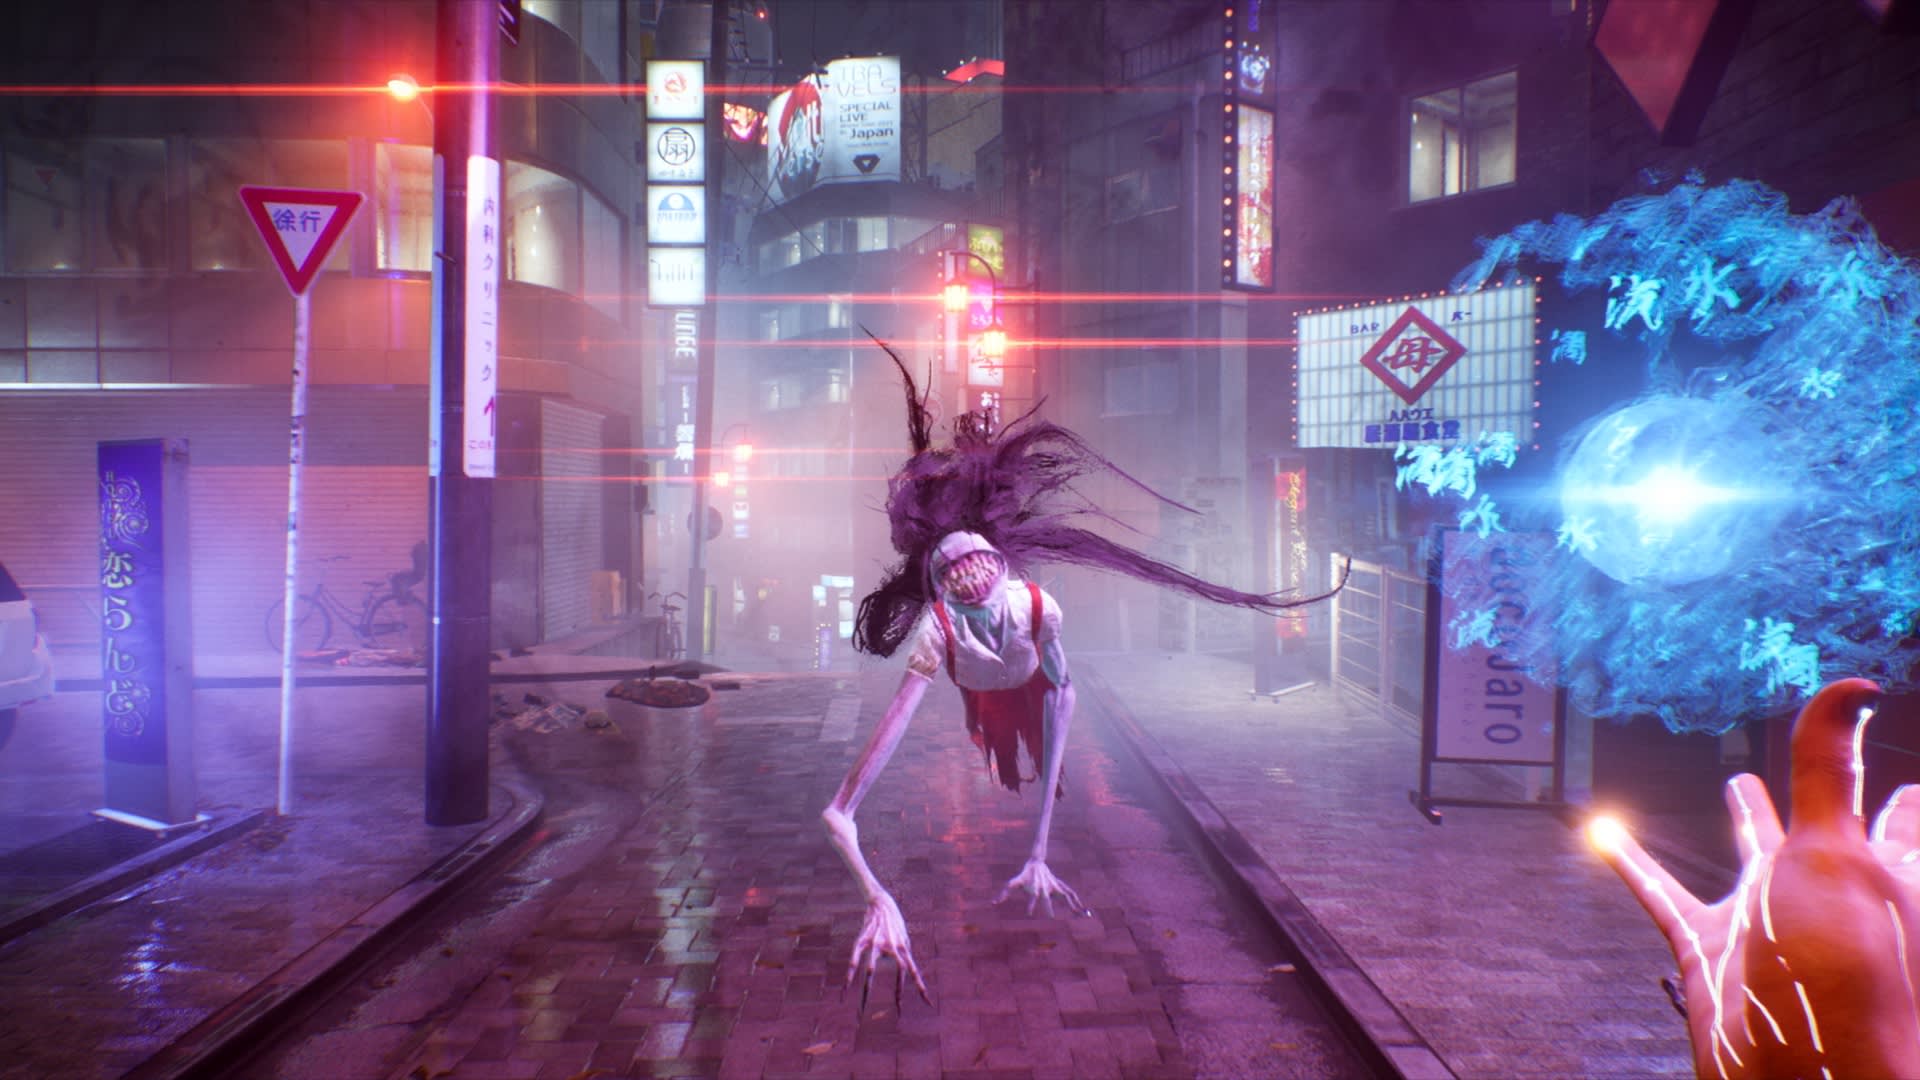 Ghostwire: Tokyo será lançado em Março – Gamer News